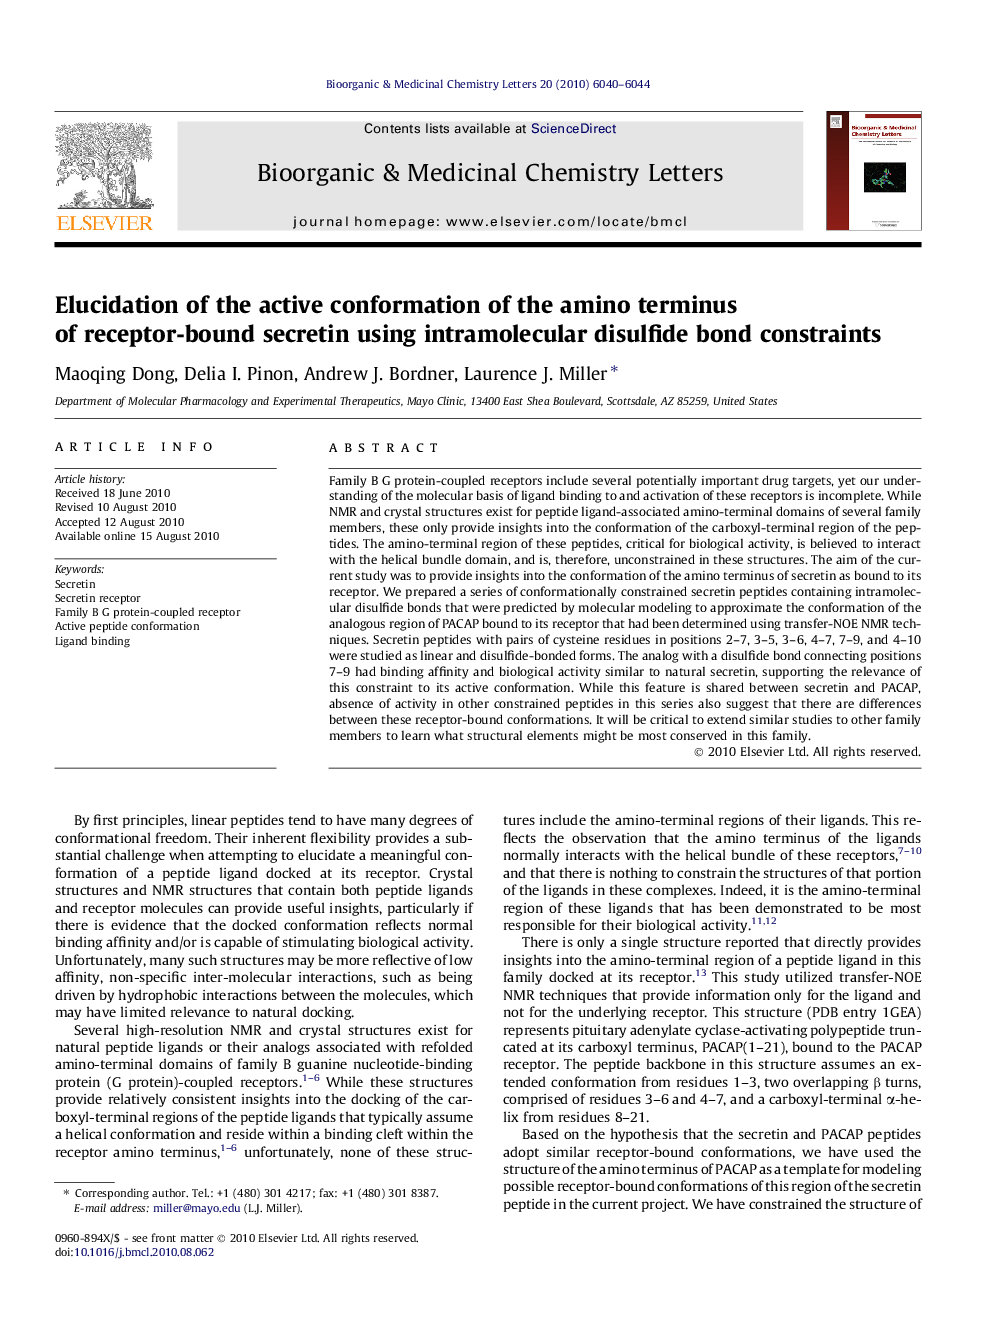 Elucidation of the active conformation of the amino terminus of receptor-bound secretin using intramolecular disulfide bond constraints